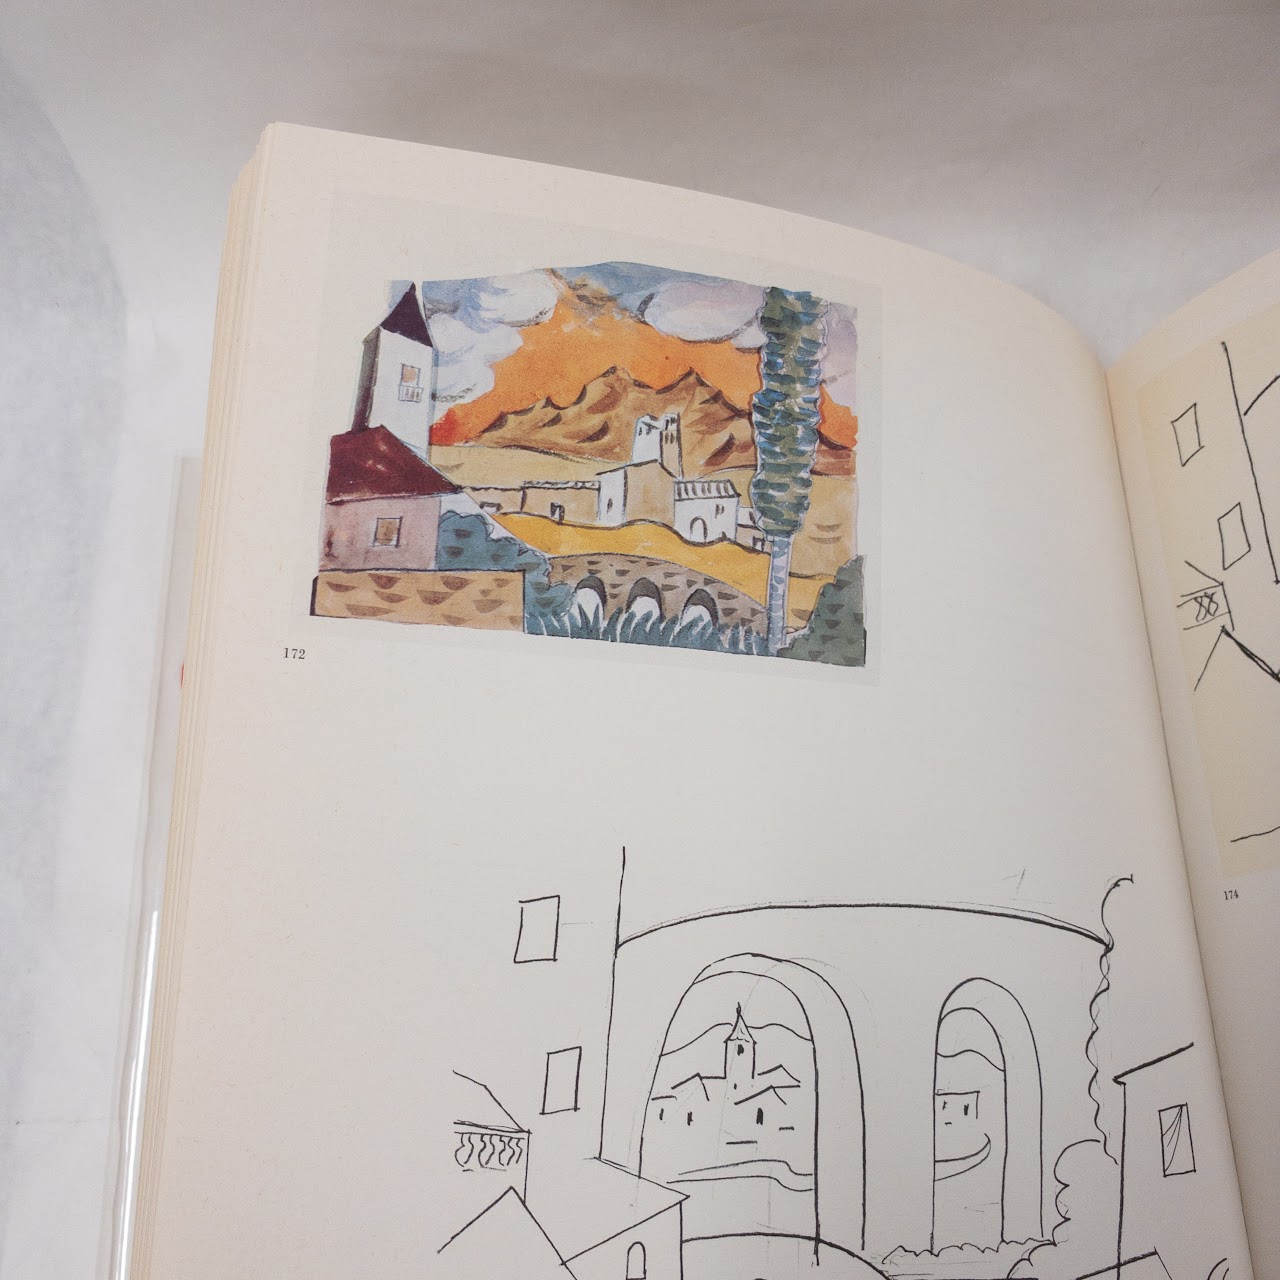 Picasso 'Theatre' Art Works Book